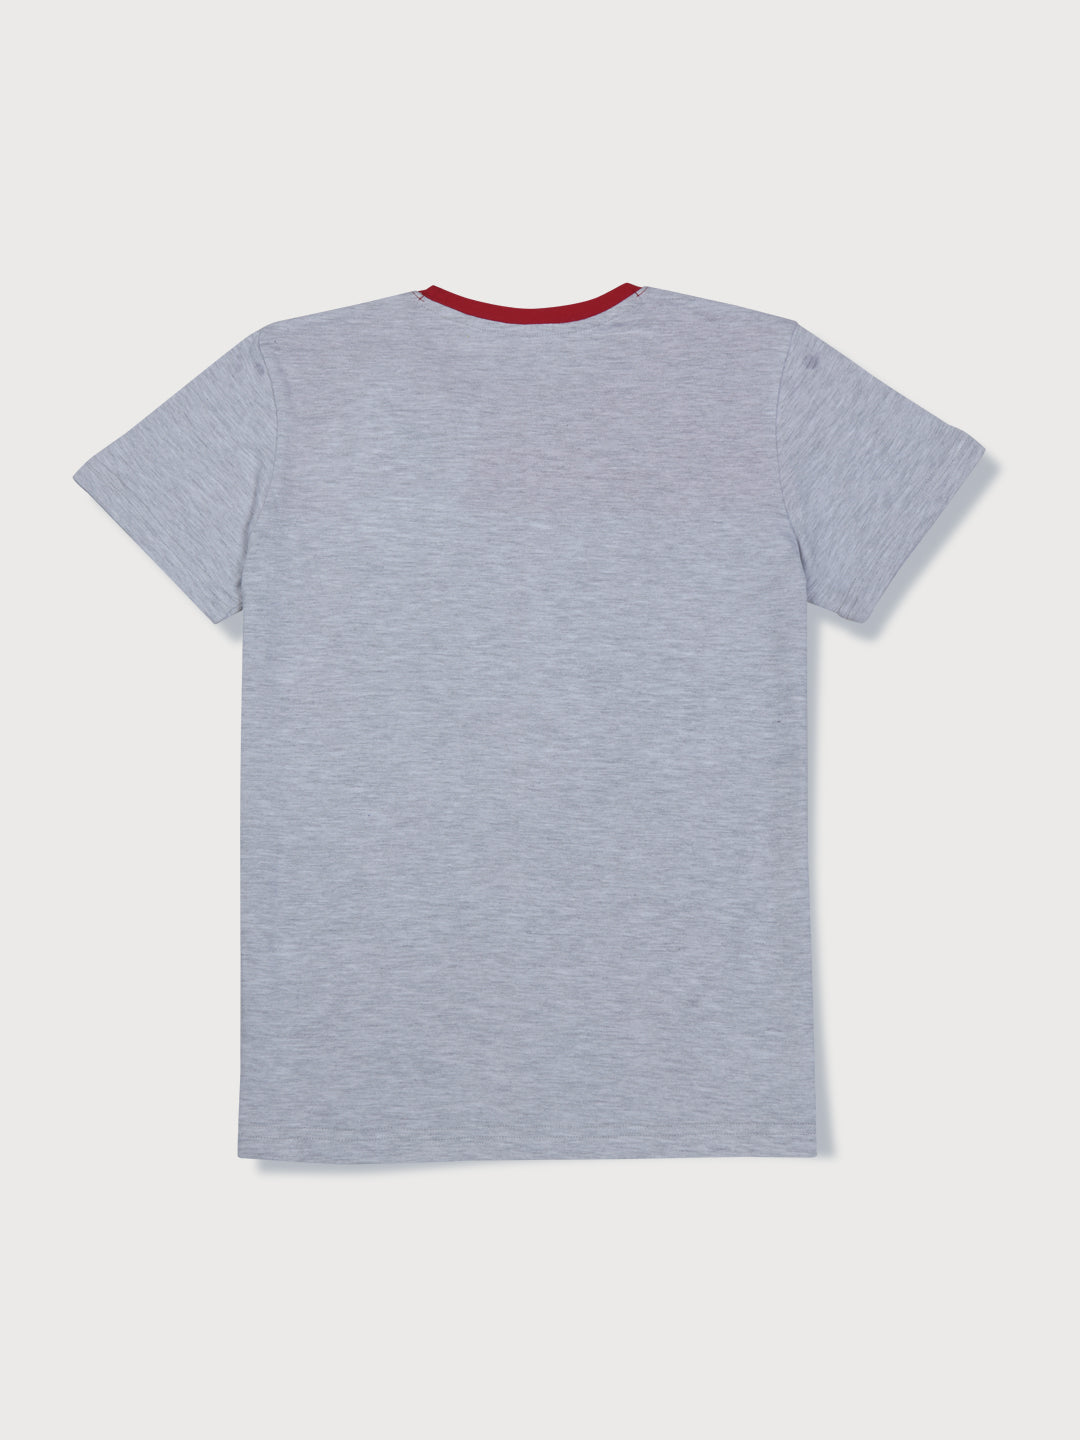 Boys Grey Colourblock Knits T-Shirt